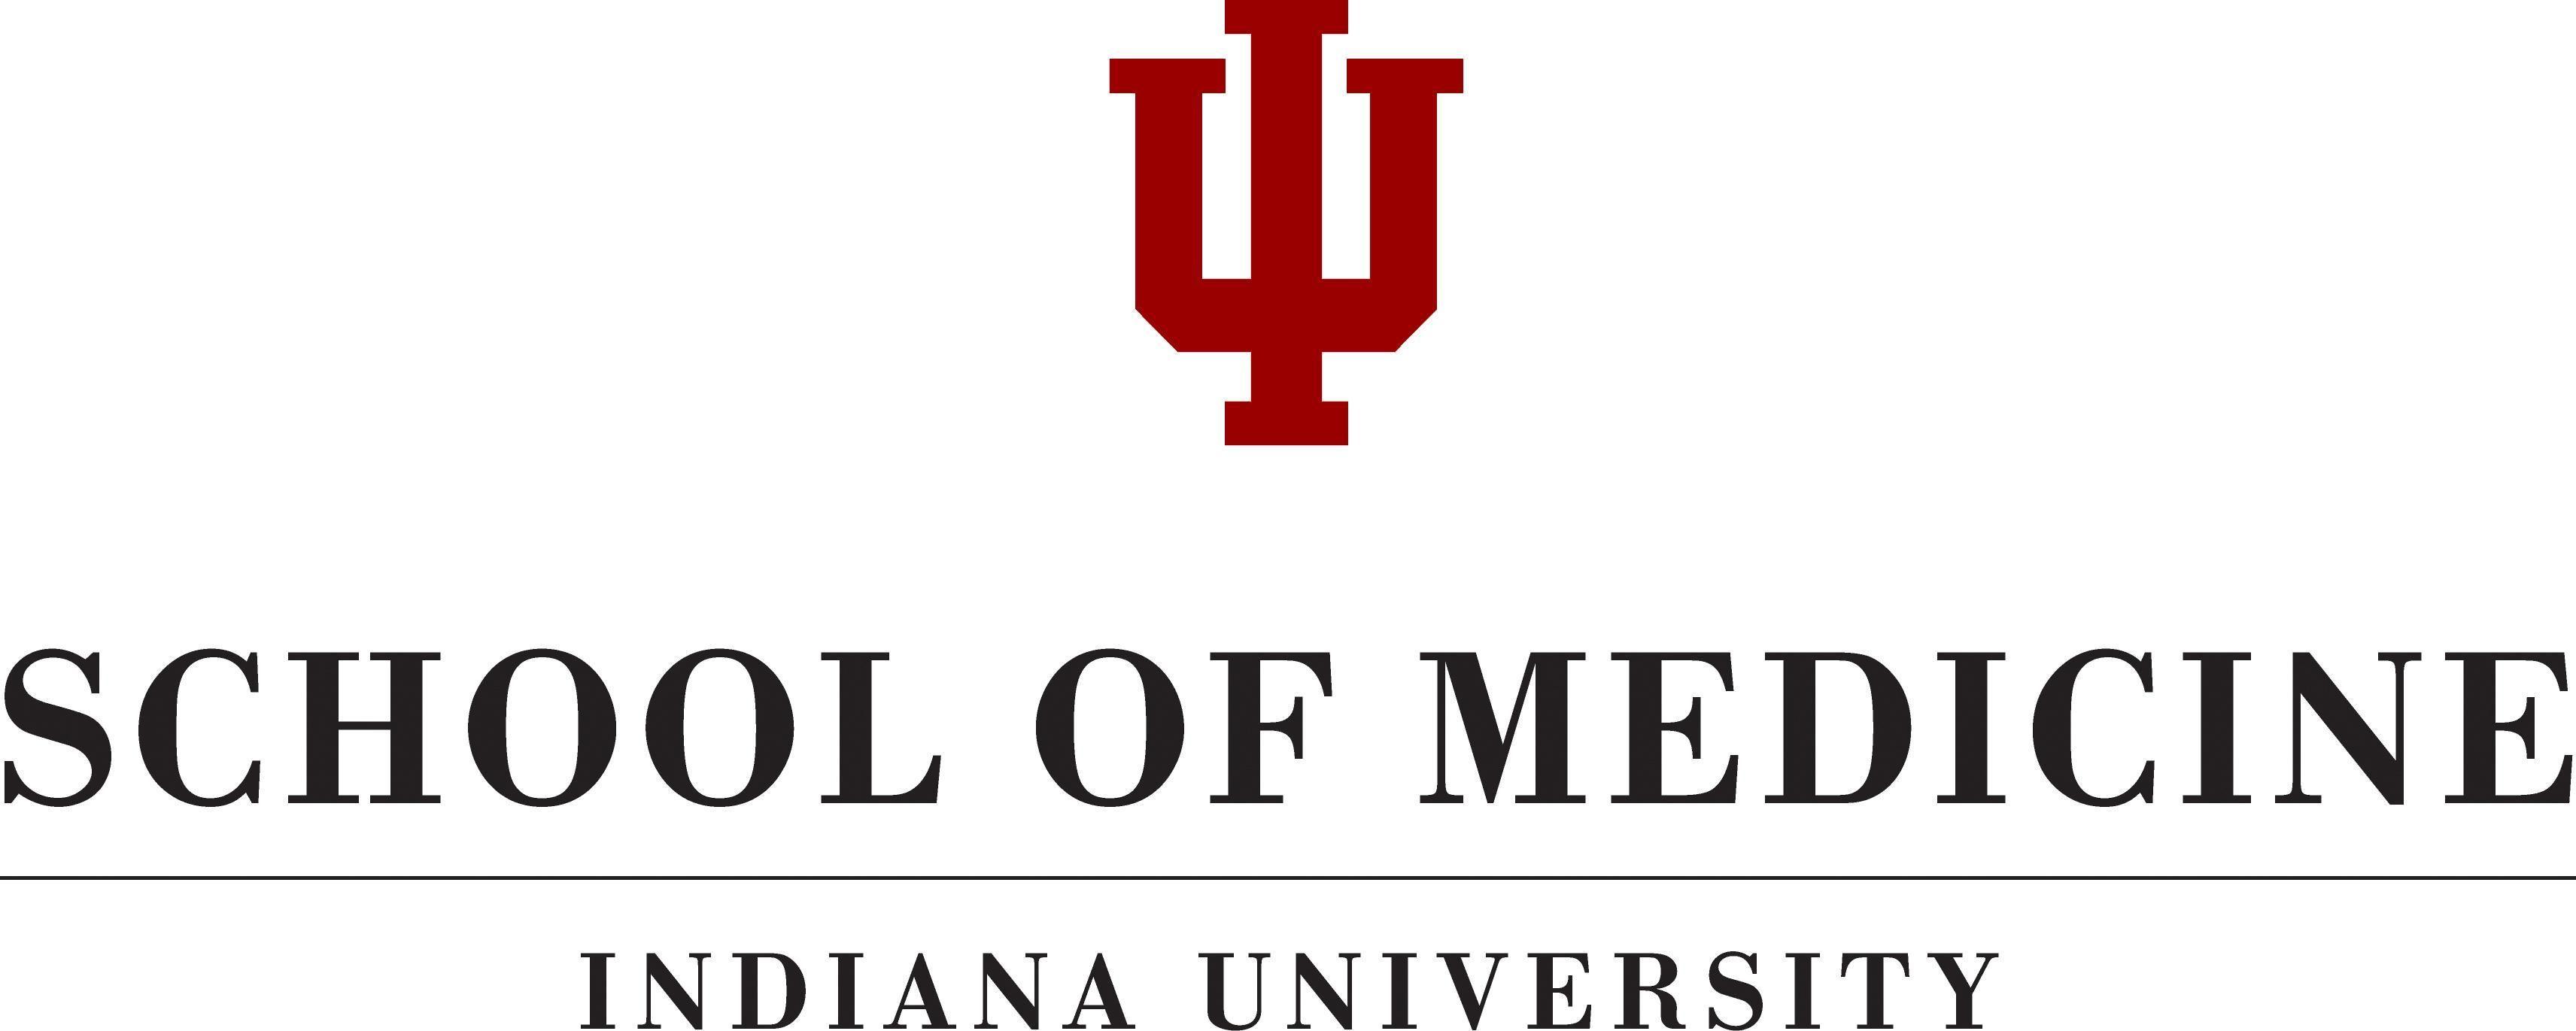 IU School of Medicine Logo - IU School of Medicine Competitors, Revenue and Employees - Owler ...